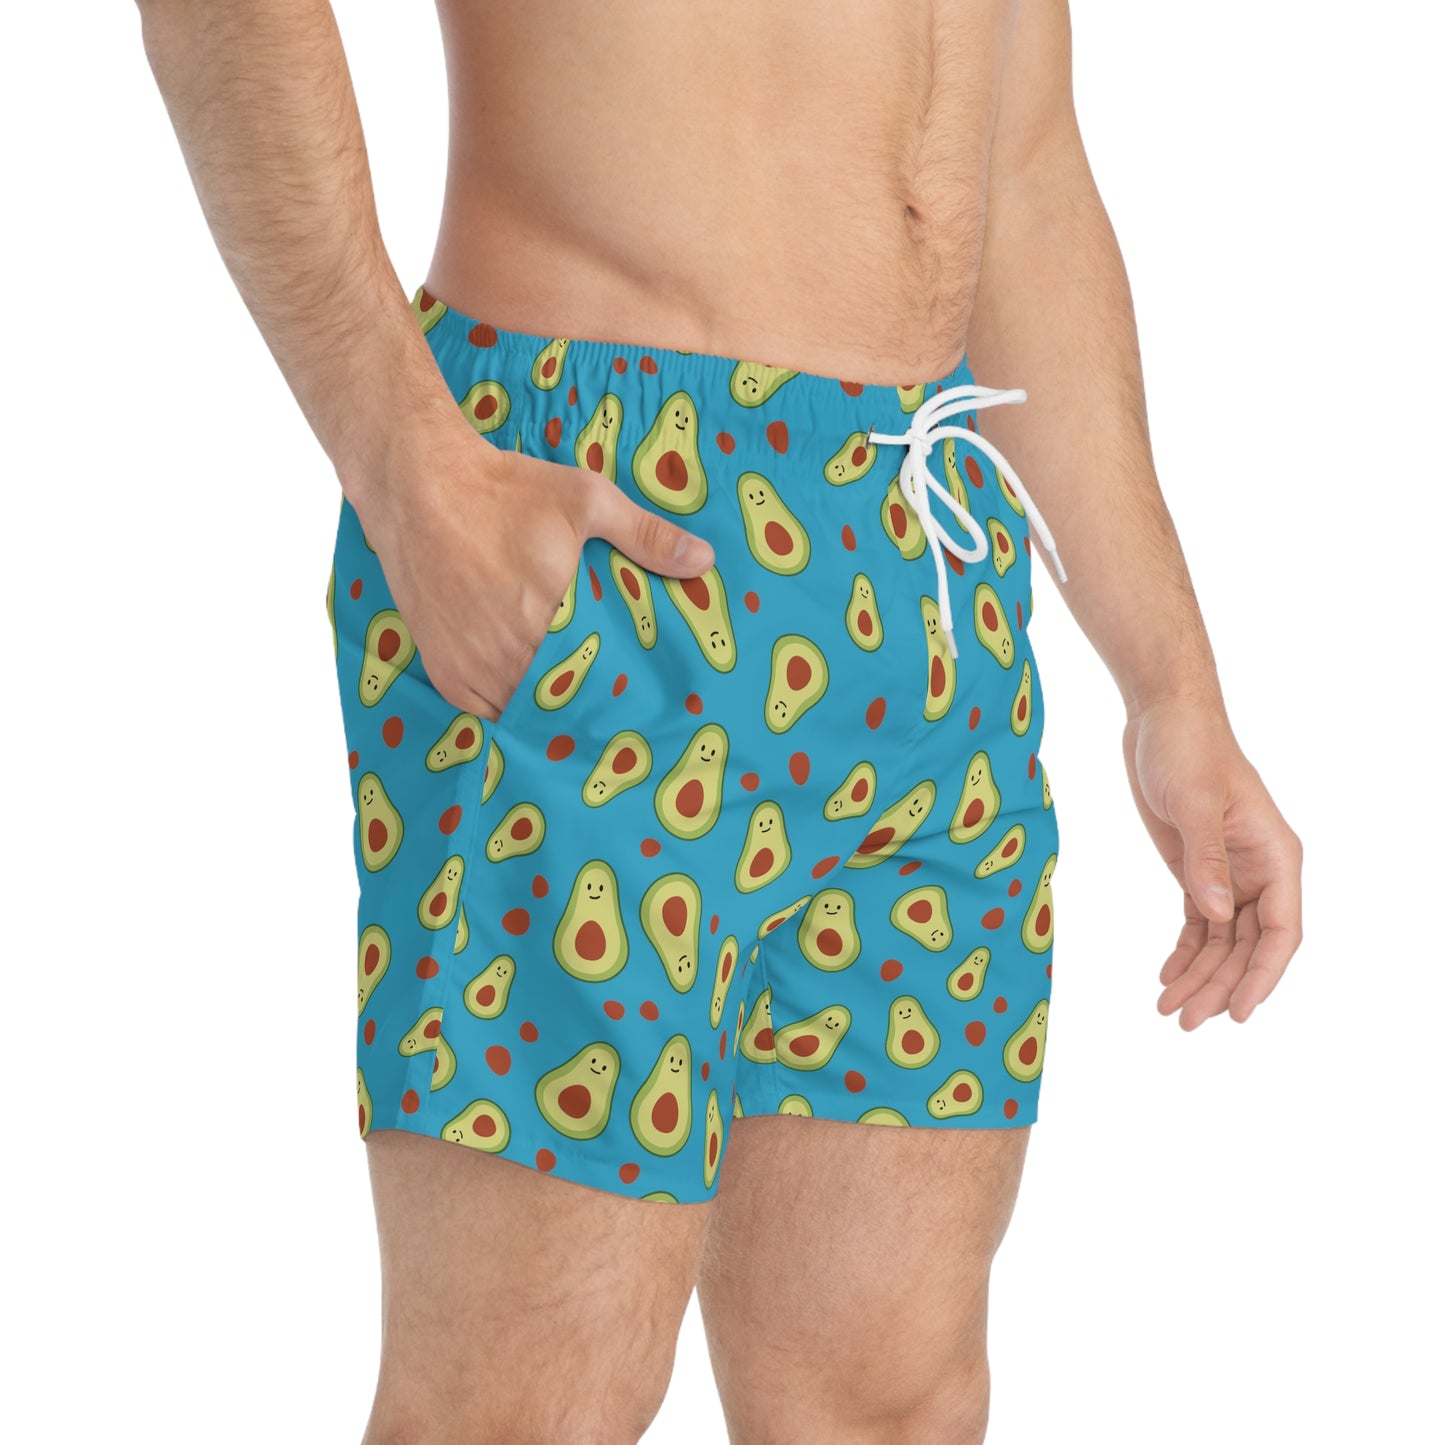 Men's "His" Avocado Swim Shorts